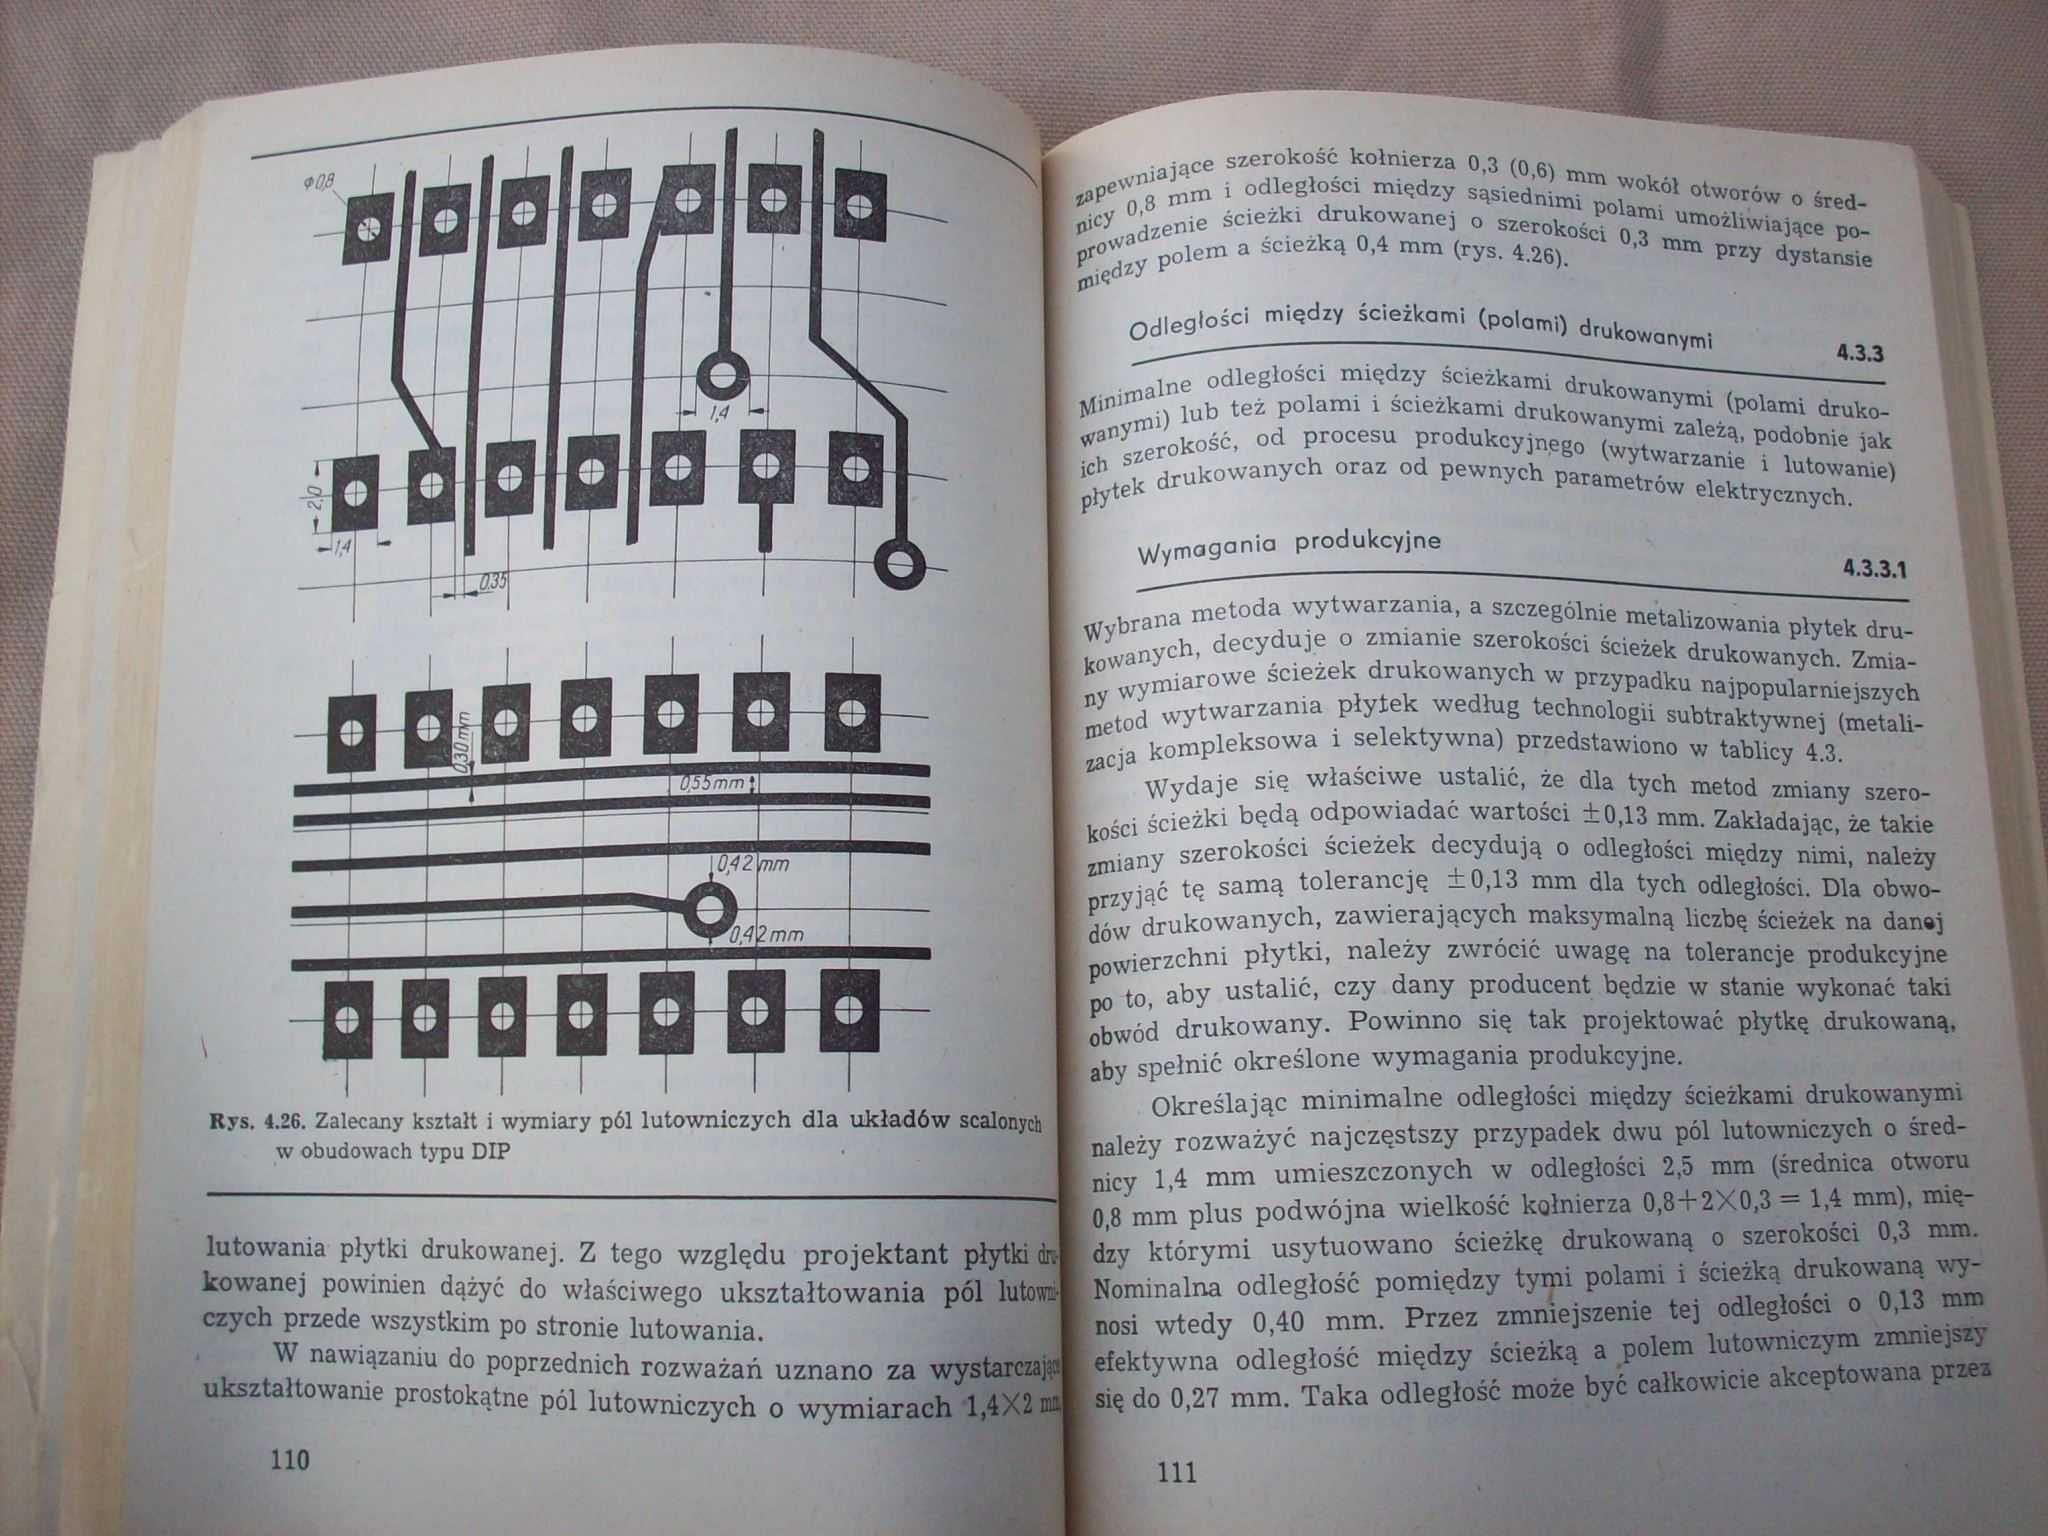 Obwody drukowane, M.Mika, 1983.